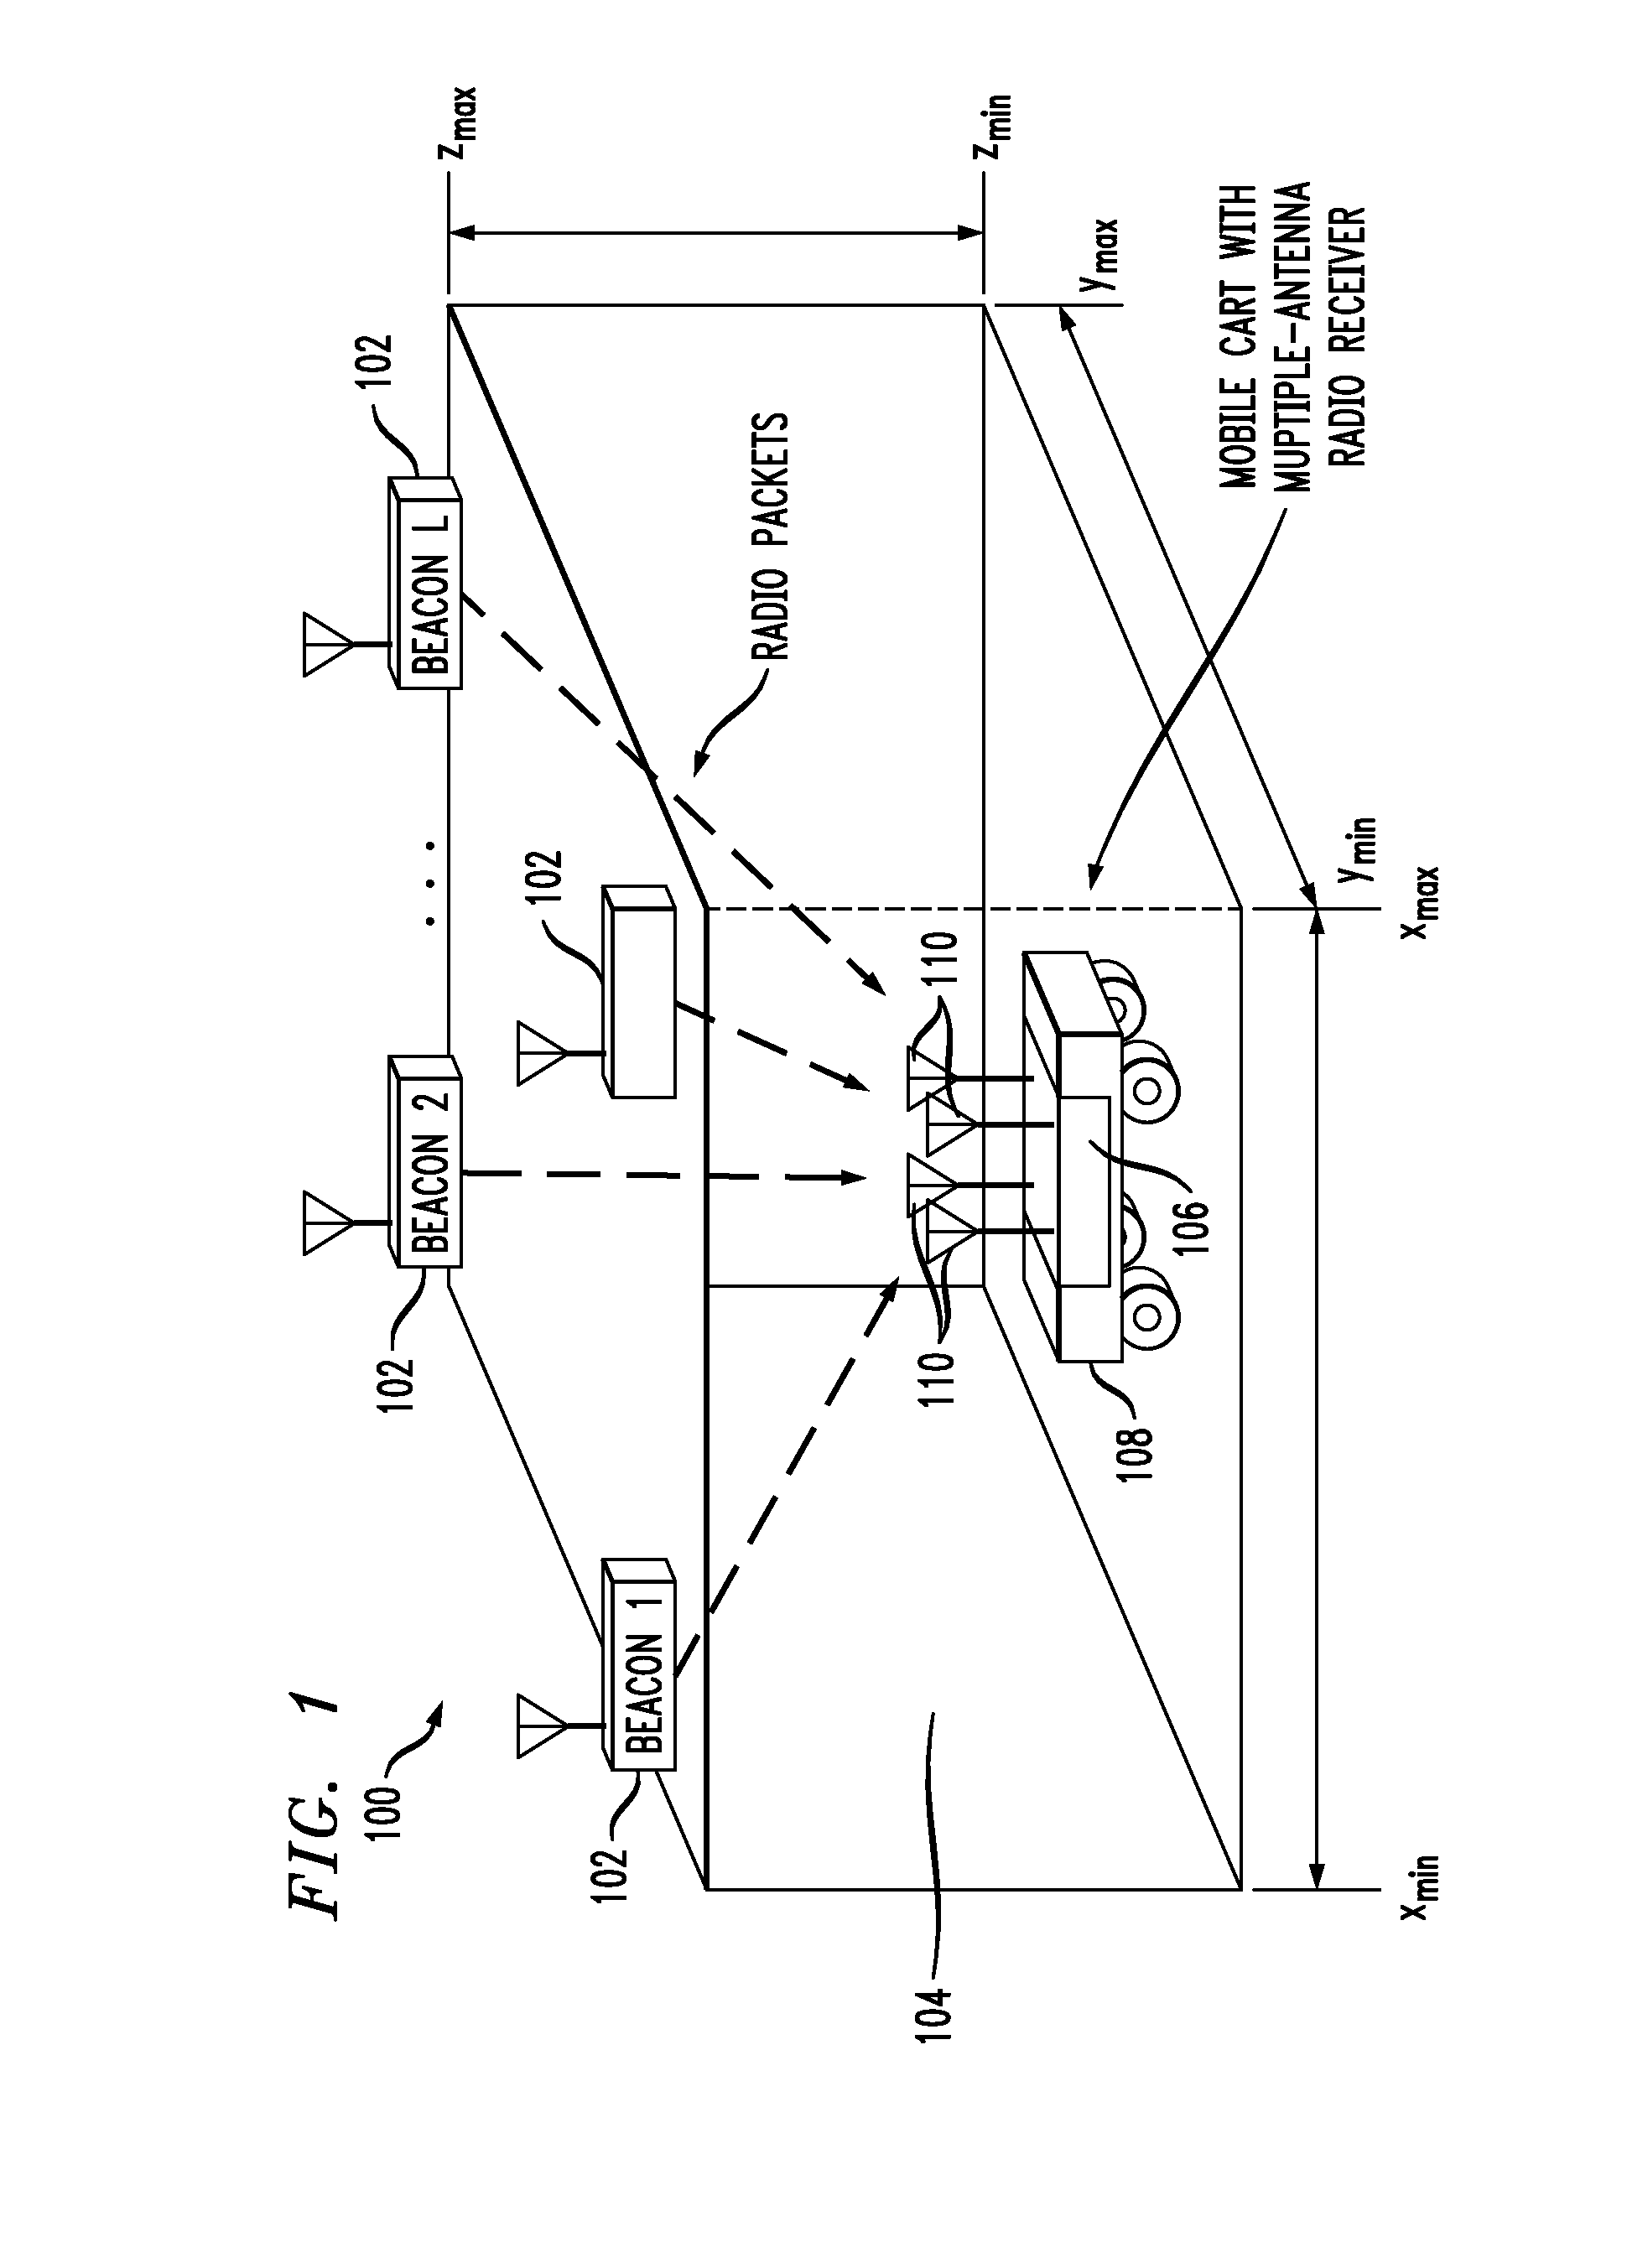 Apparatus and method for estimating location using multi-antenna radio receiver